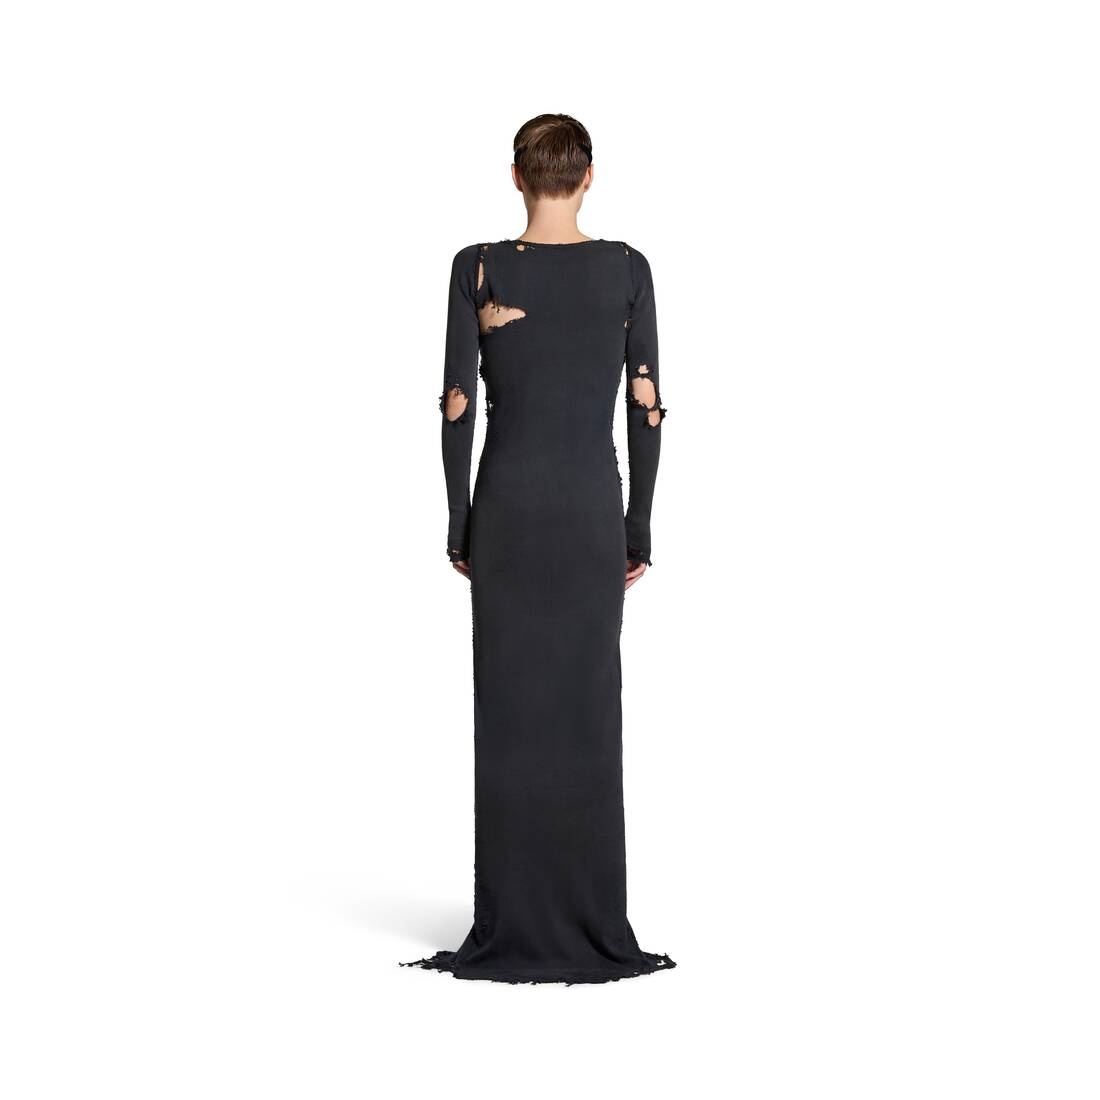 Women's Lingerie Maxi Dress in Black - 4